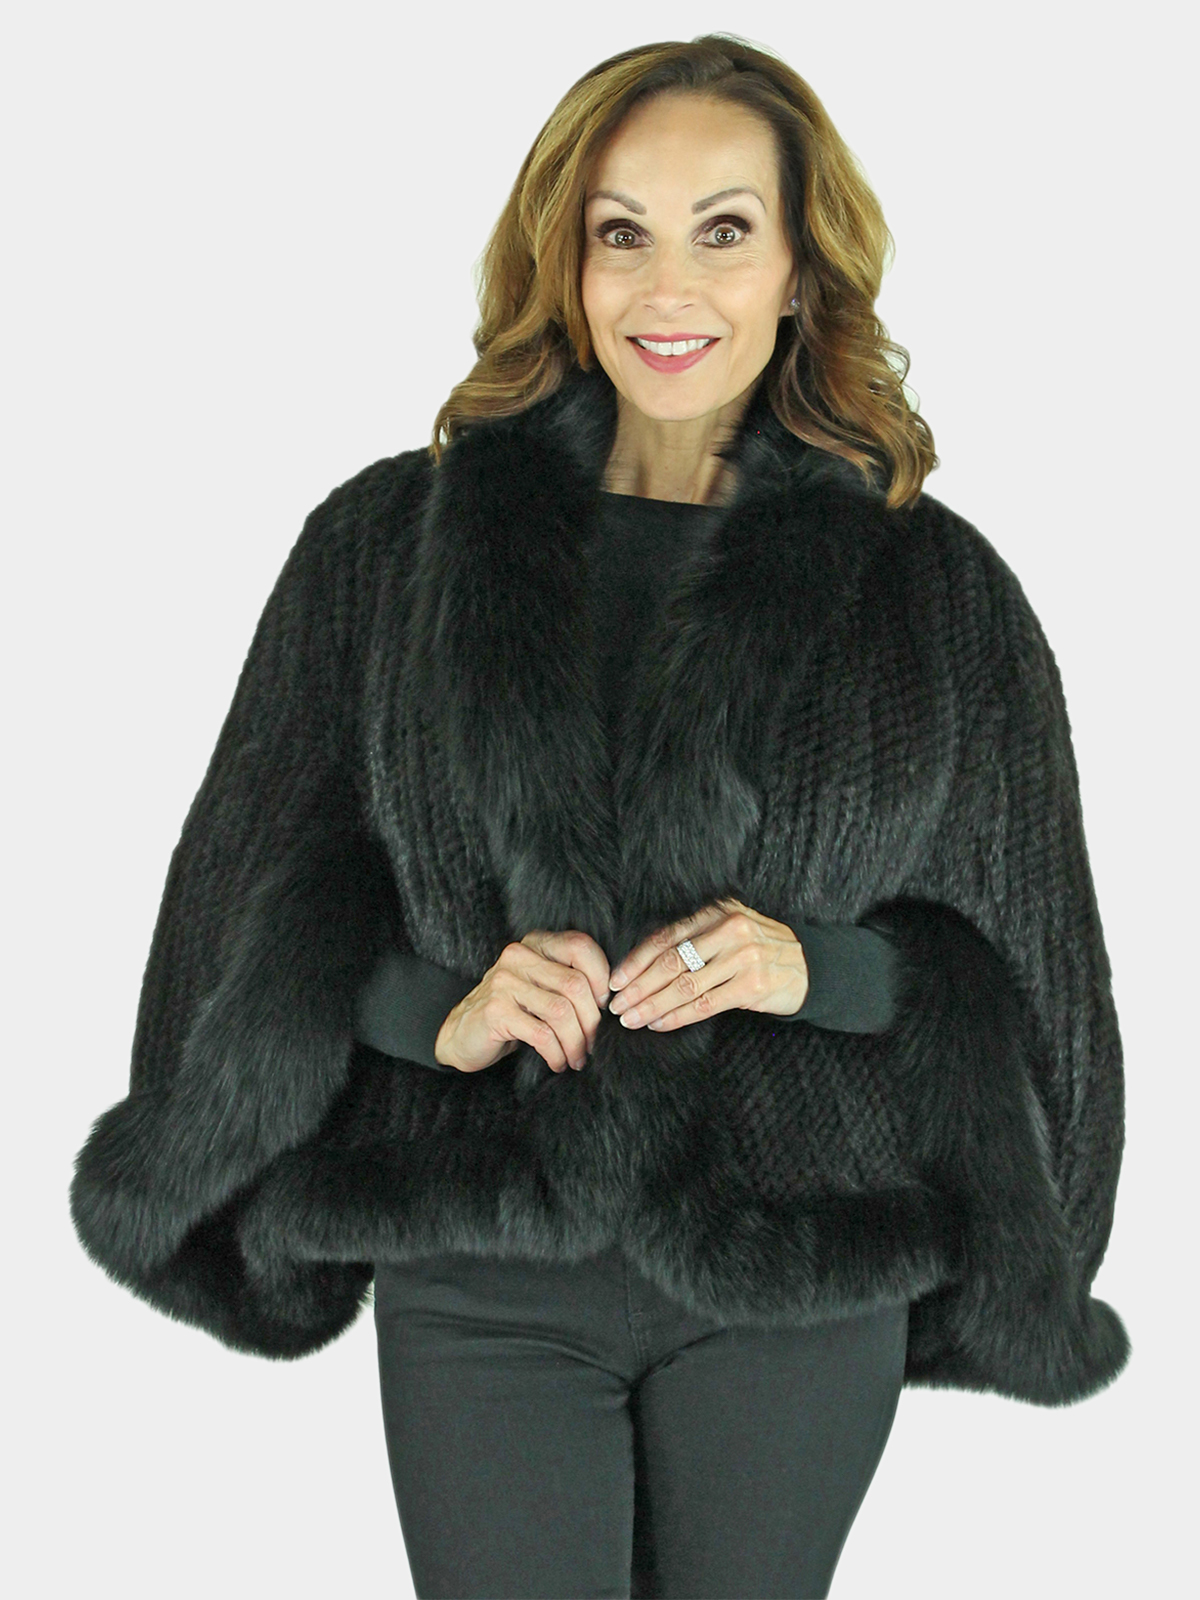 Woman's Black Knitted Mink Fur Cape